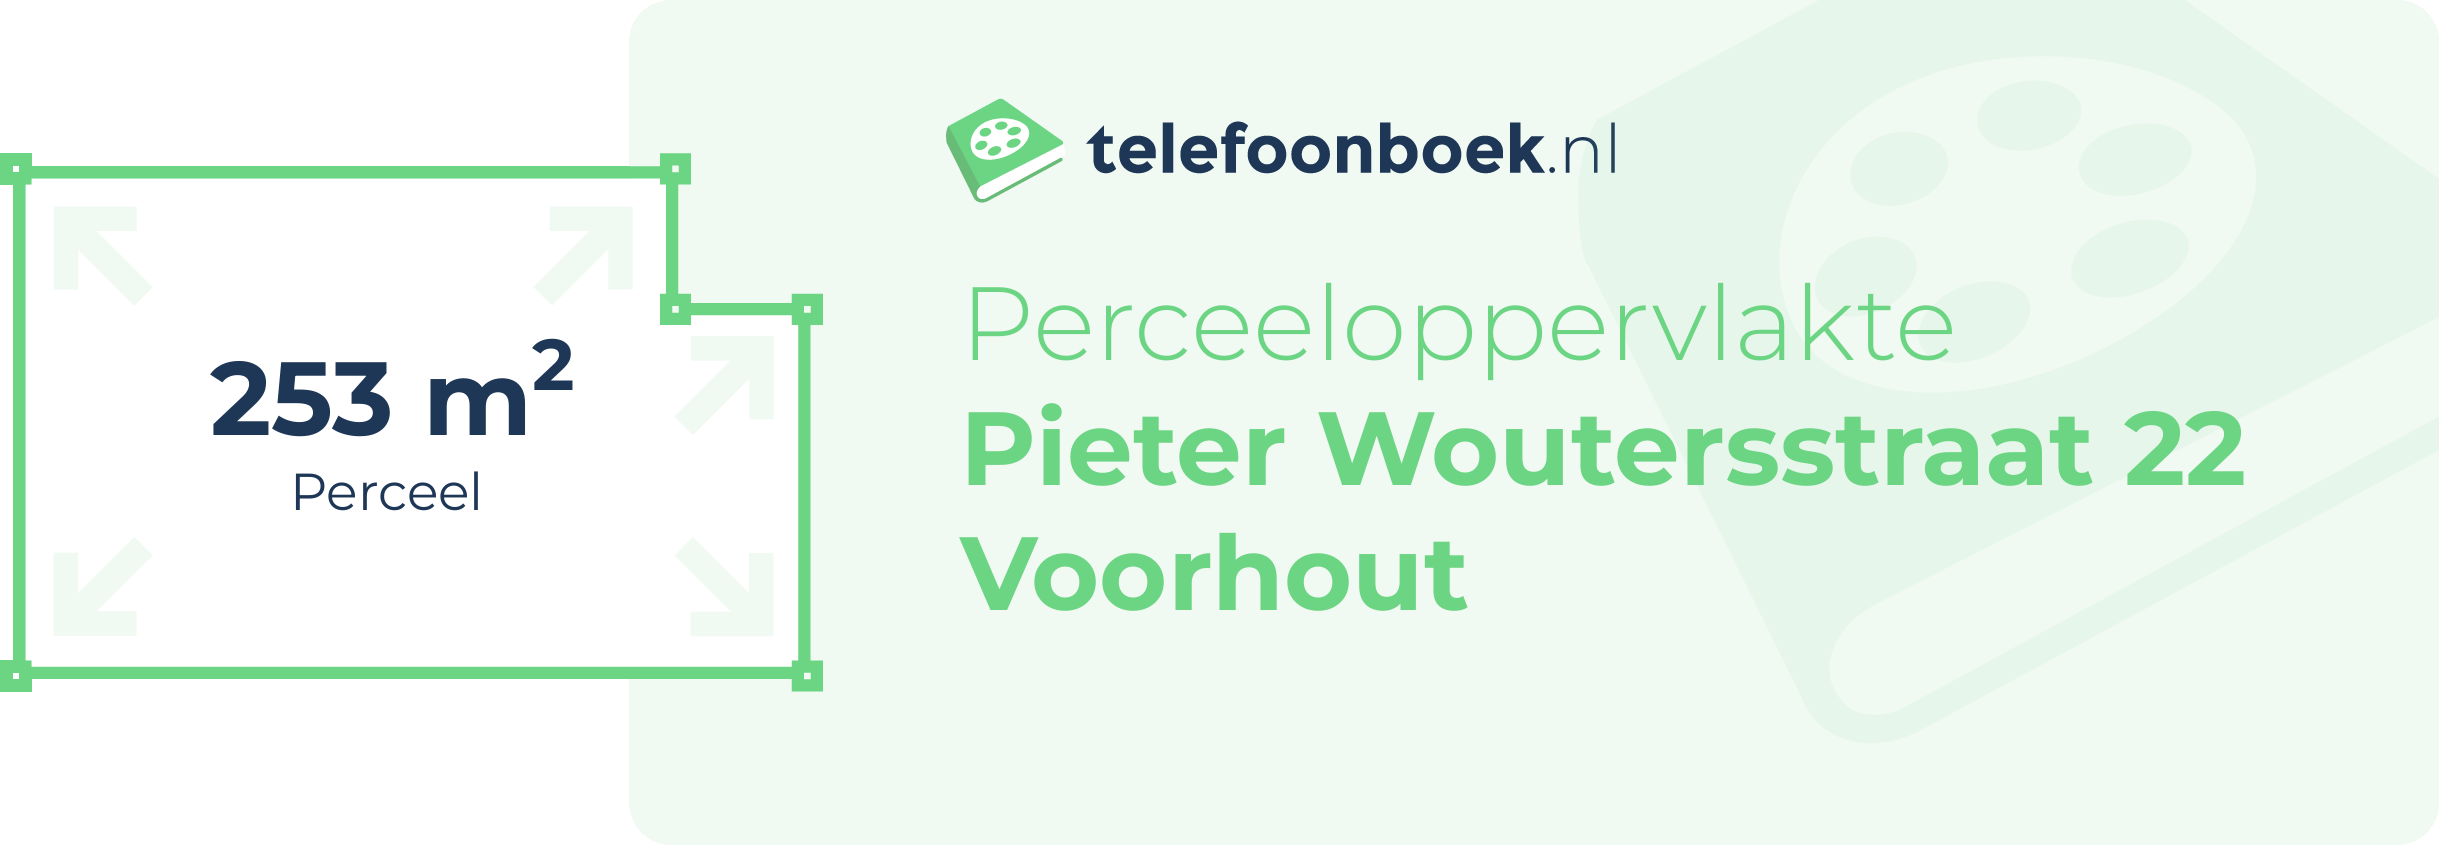 Perceeloppervlakte Pieter Woutersstraat 22 Voorhout